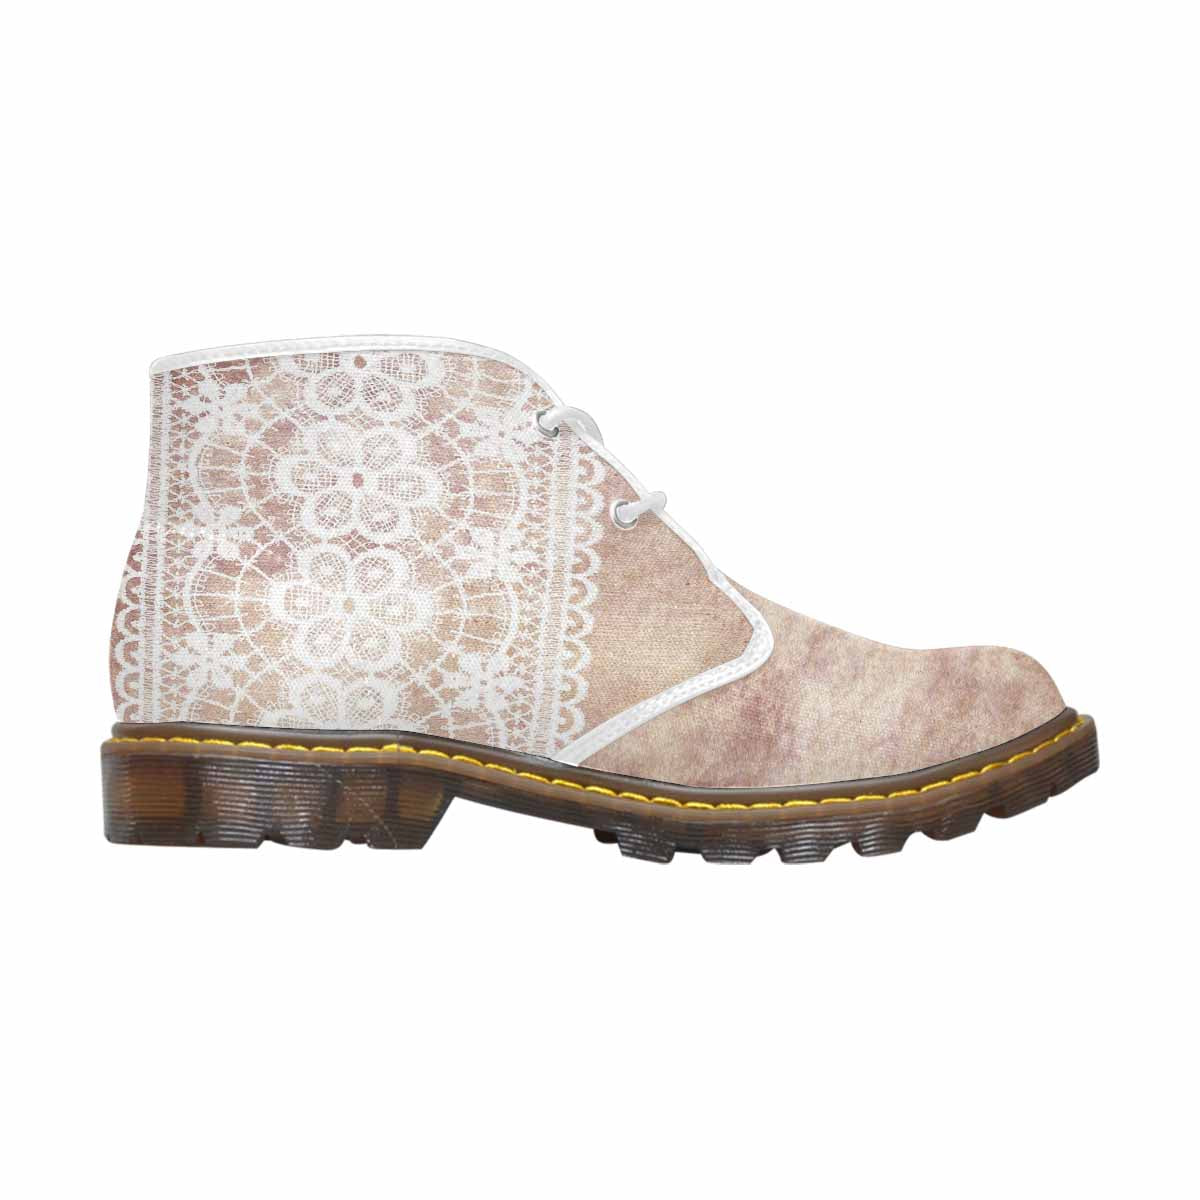 Lace Print, Cute comfy womens Chukka boots, design 35